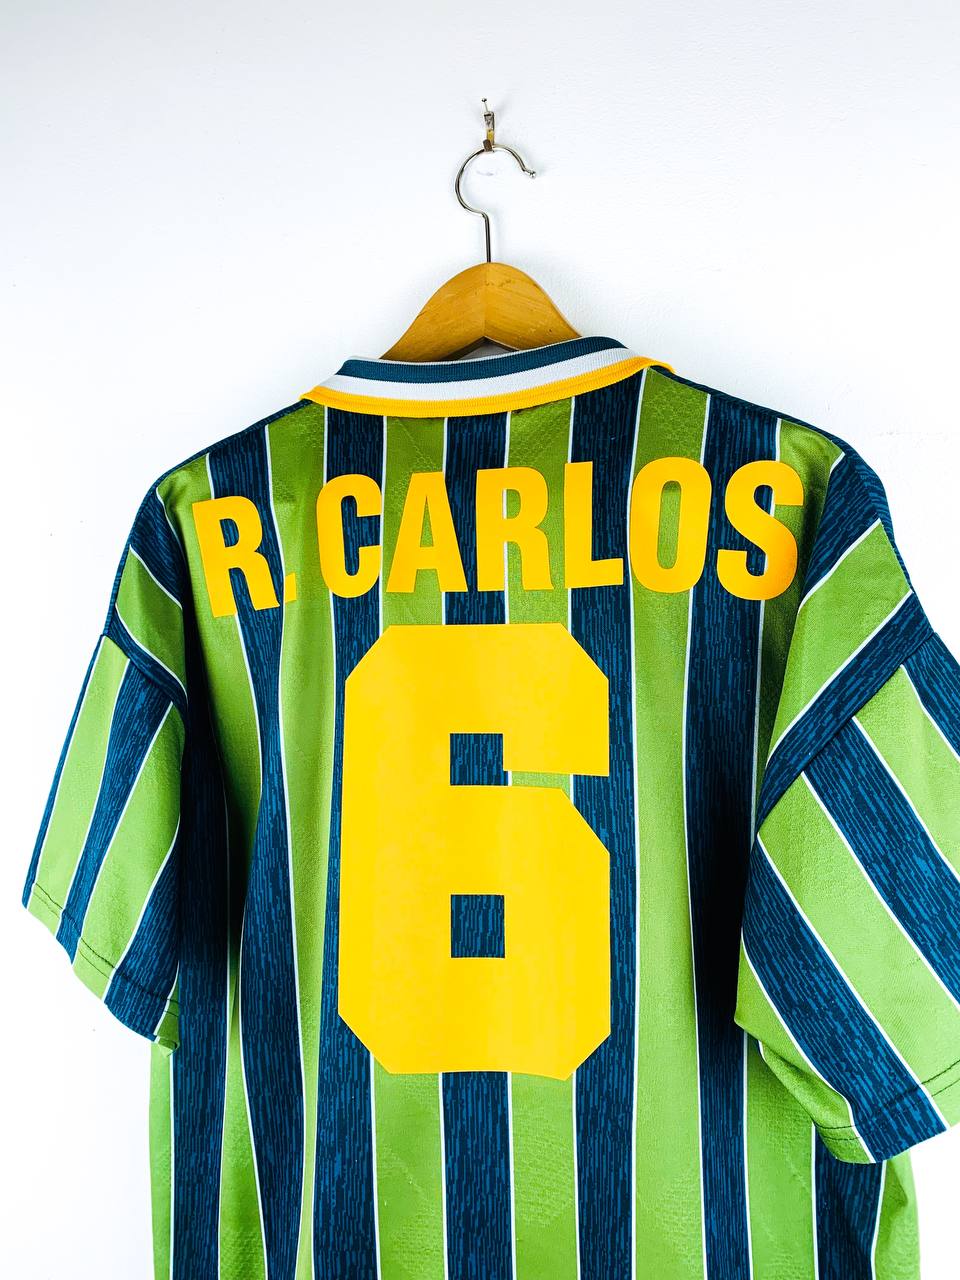 INTER MILAN 1995/1996 THIRD SHIRT #6 R.CARLOS